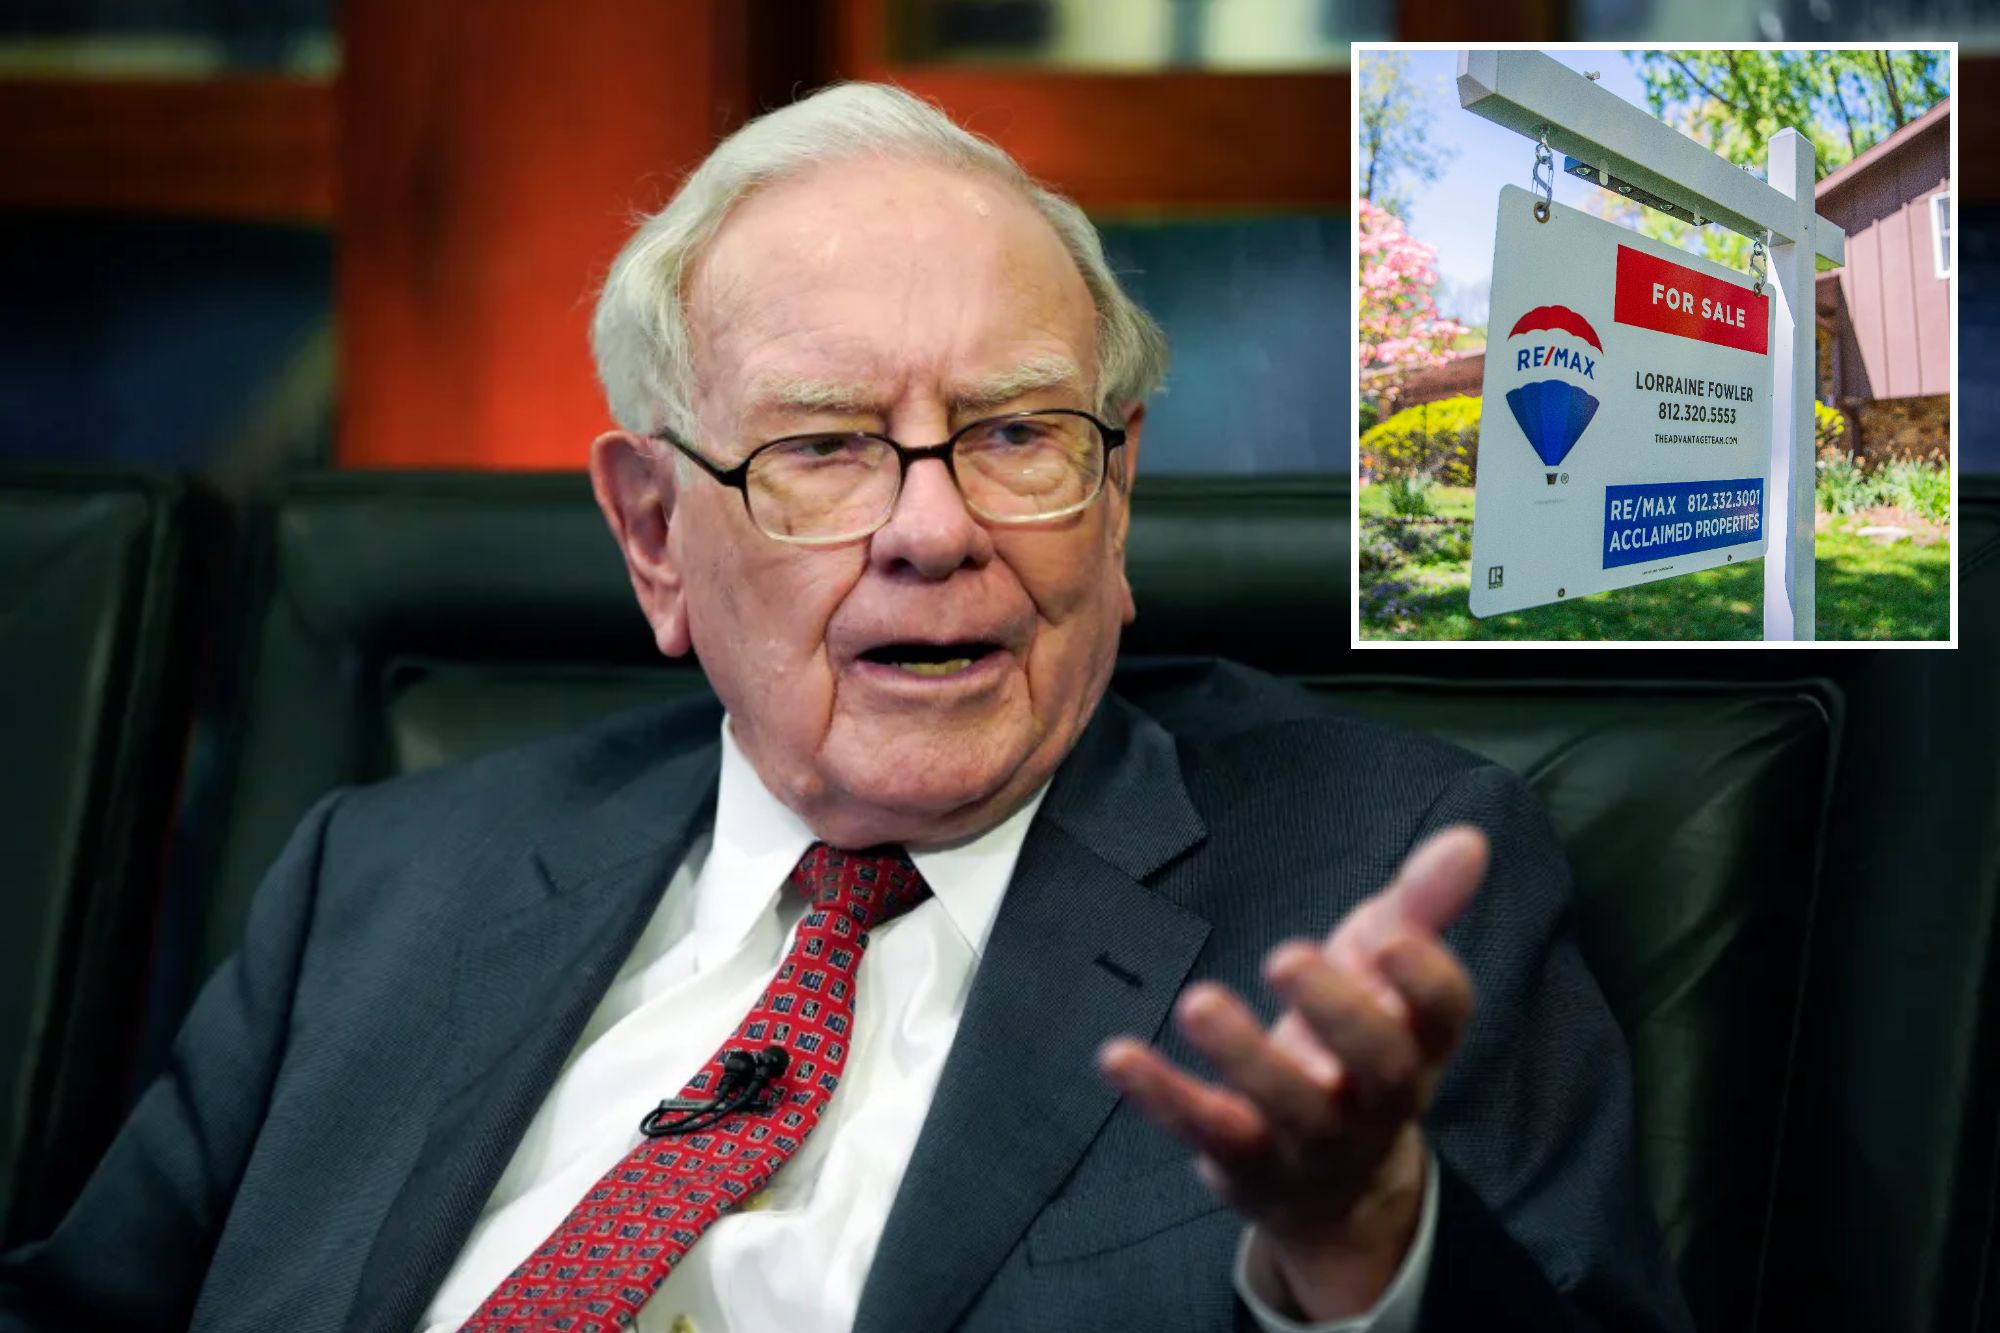 Berkshire Hathaway Chairman Warren Buffett and home for sale sign